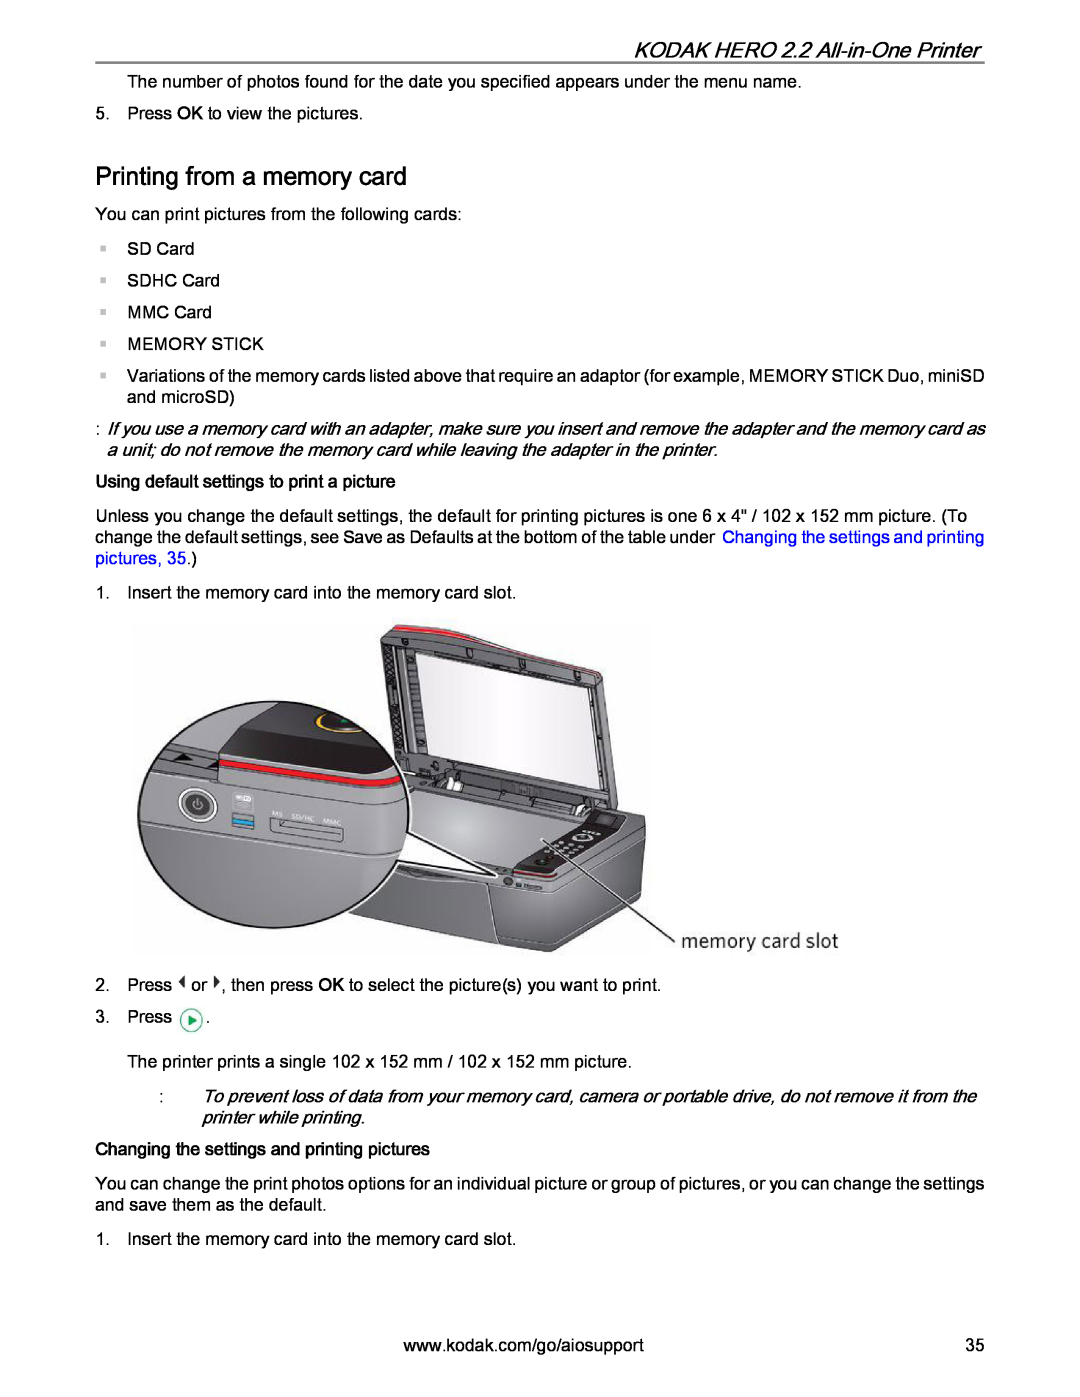 Kodak manual Printing from a memory card, Using default settings to print a picture, KODAK HERO 2.2 All-in-One Printer 